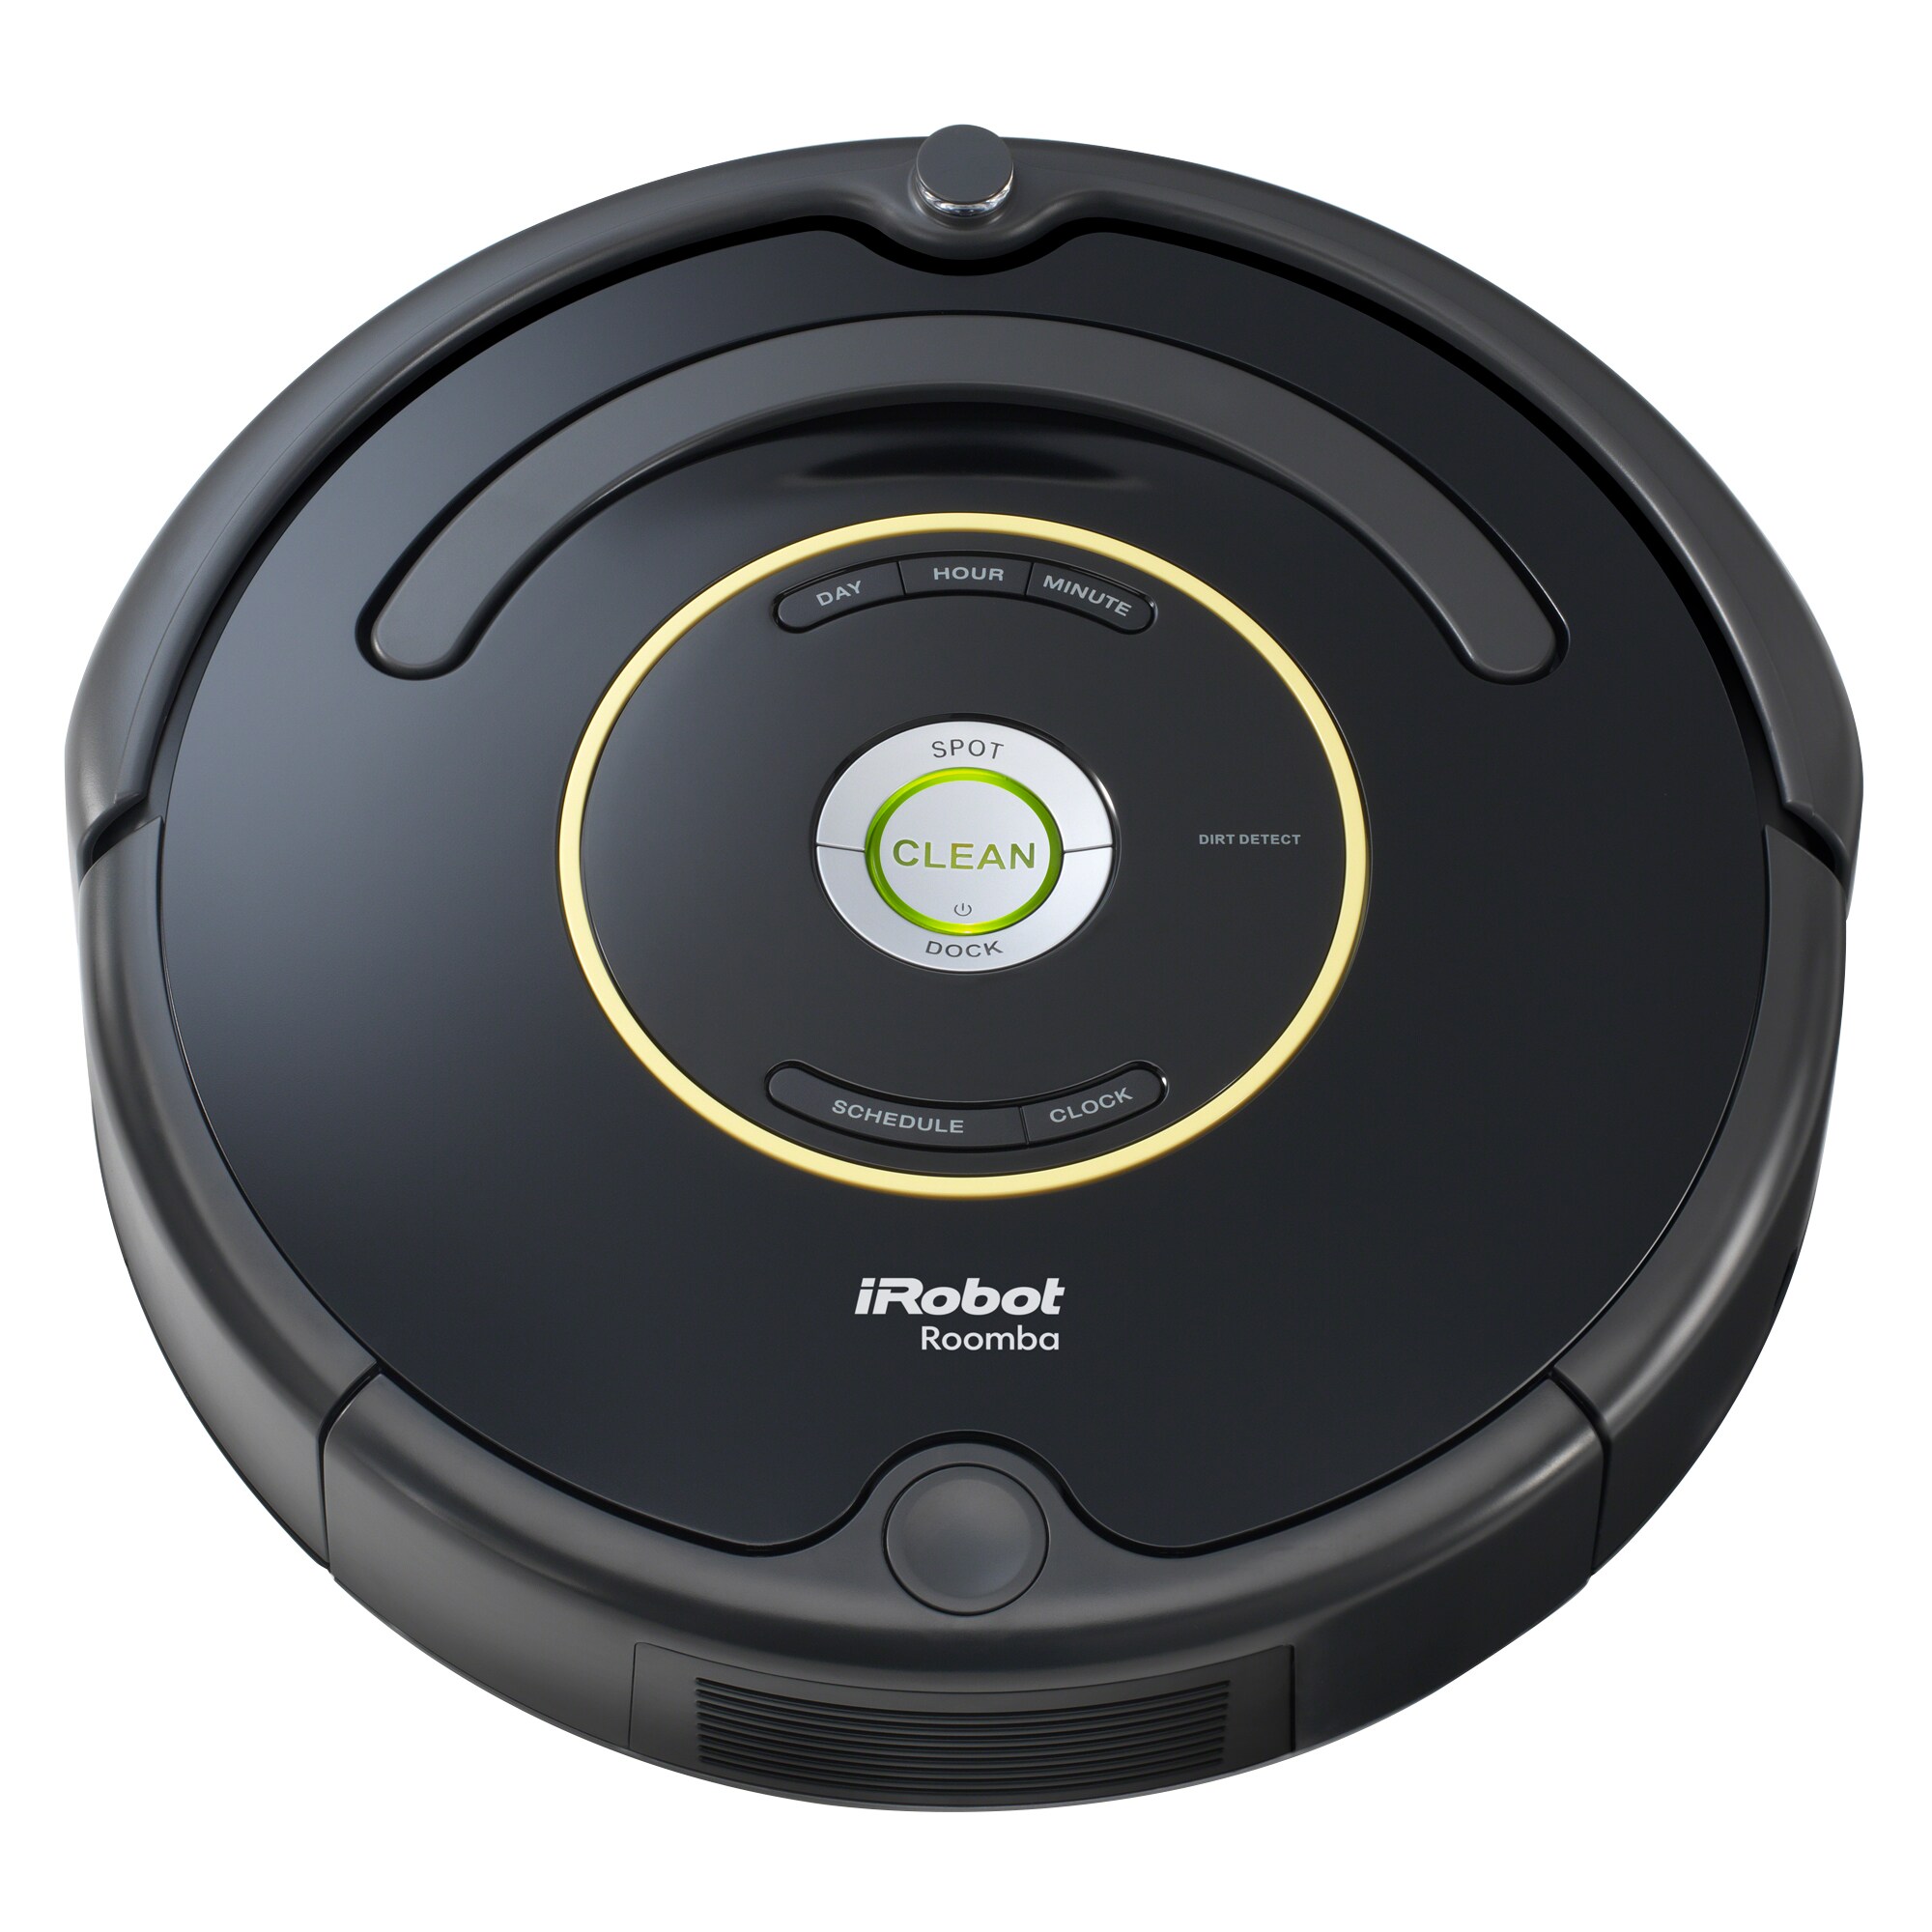 iRobot Roomba Auto Charging Pet Vacuum at Lowes.com